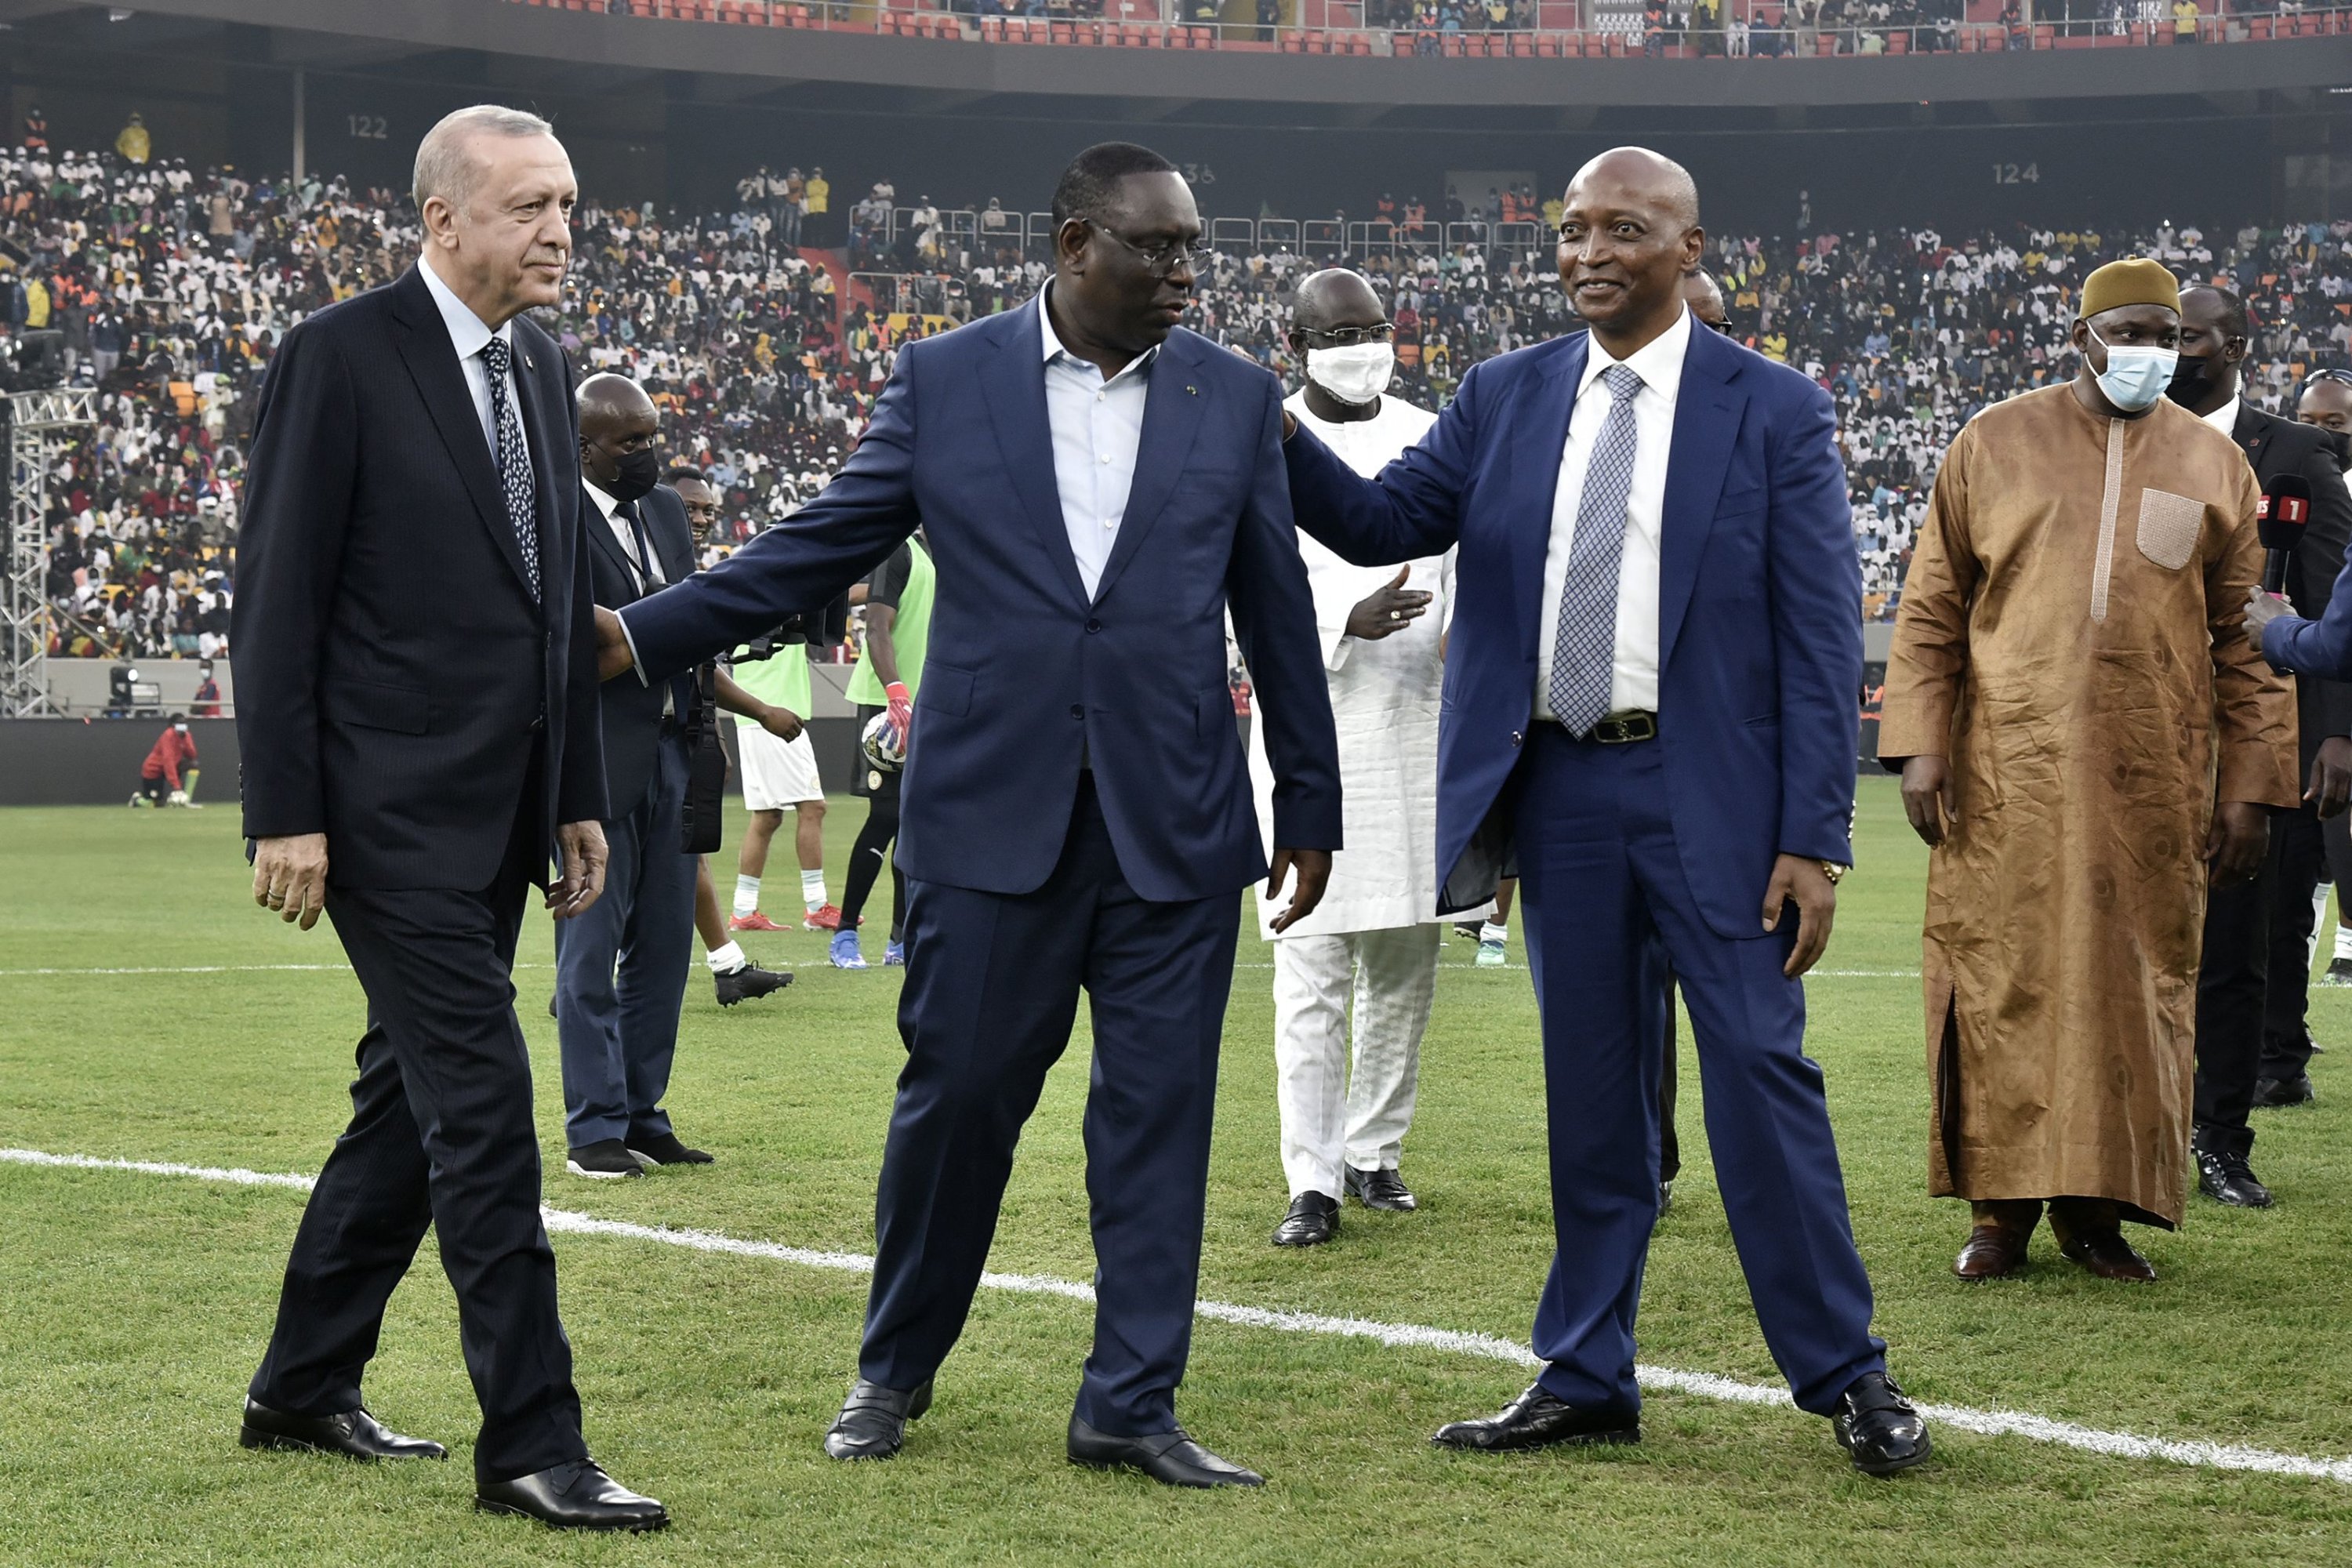 Senegal's famous soccer stadiums' attire